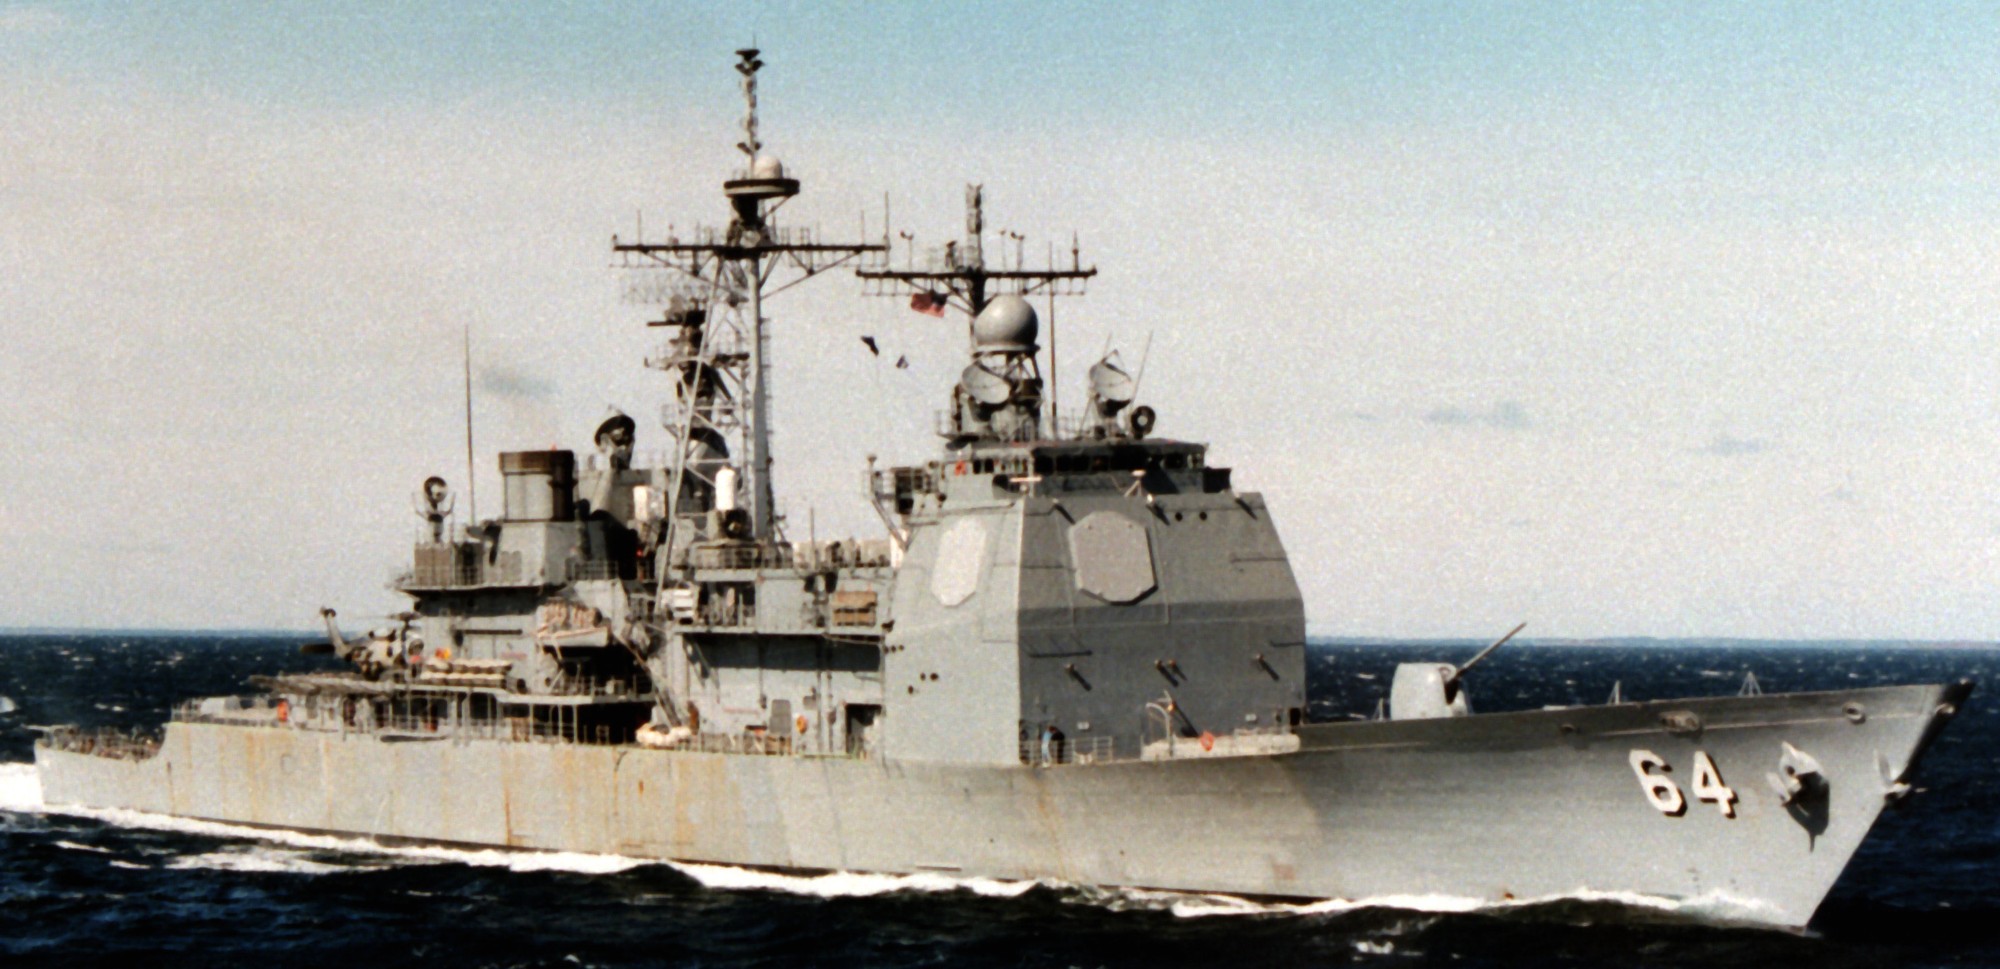 cg-64 uss gettysburg ticonderoga class guided missile cruiser aegis us navy sea trials 77